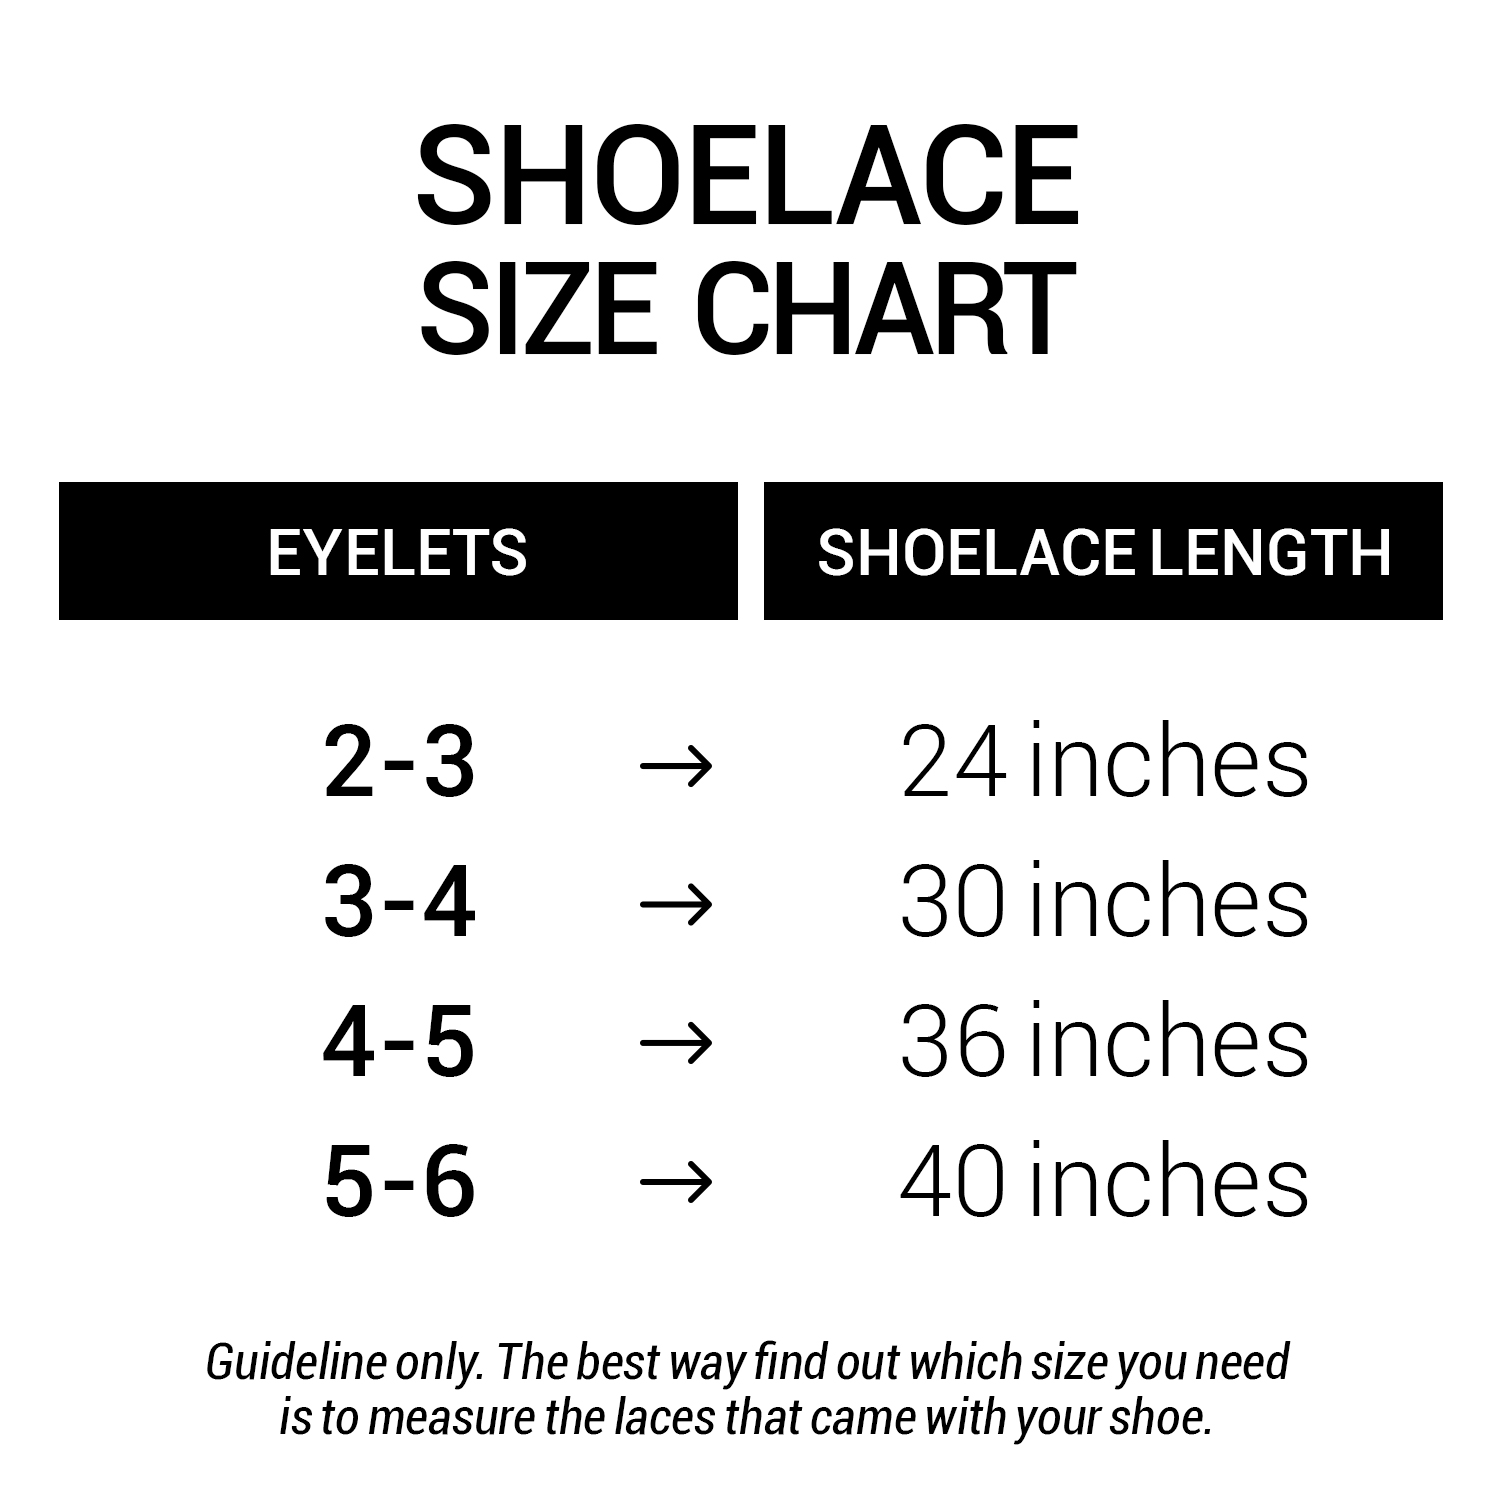 dress shoe lace size